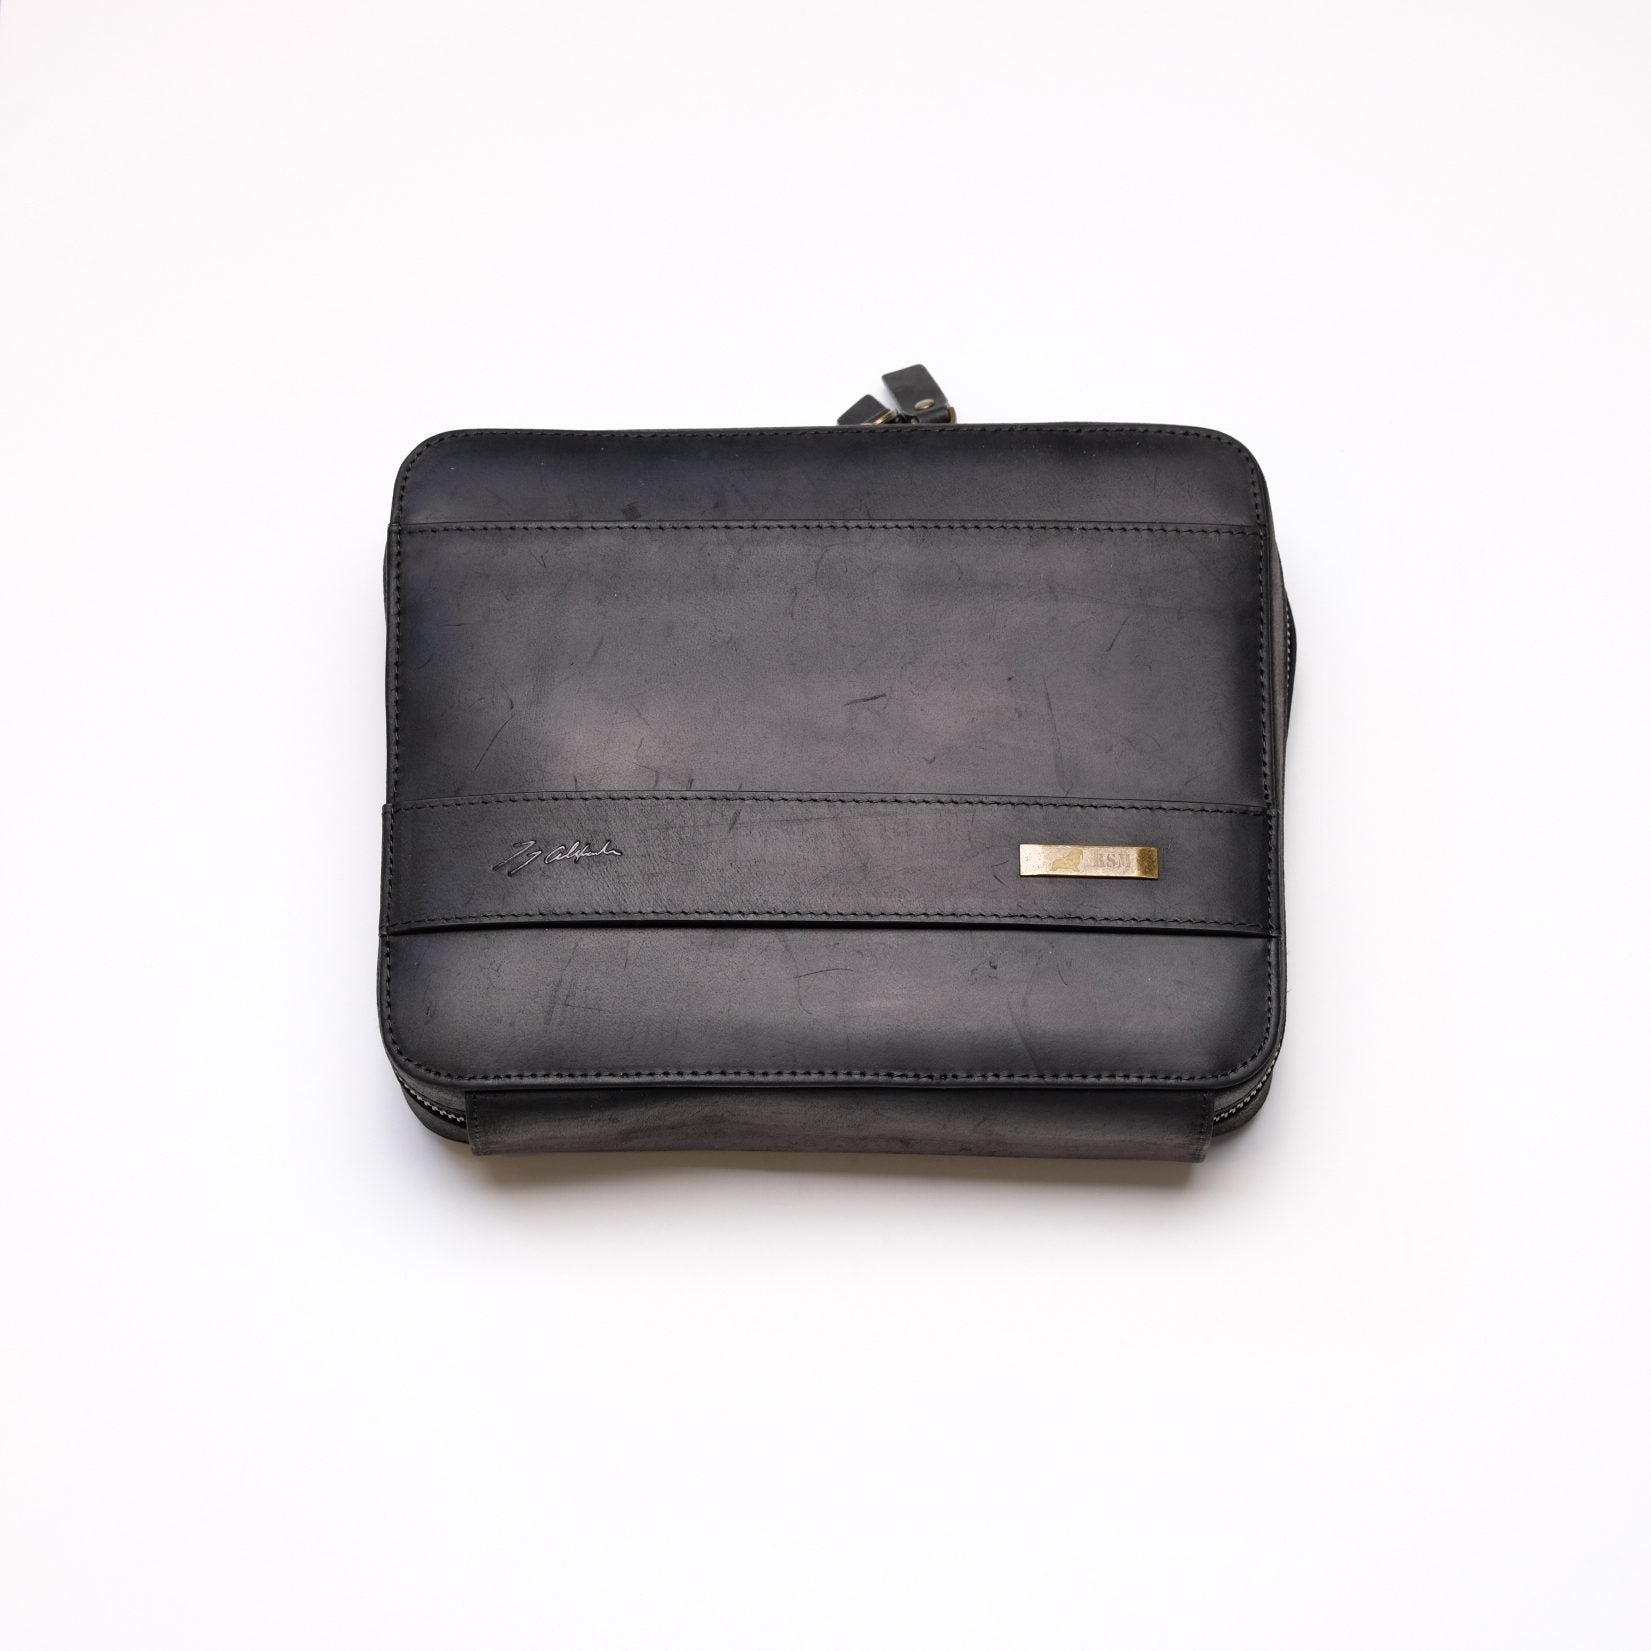 W.I.S. Kit (Black Leather)